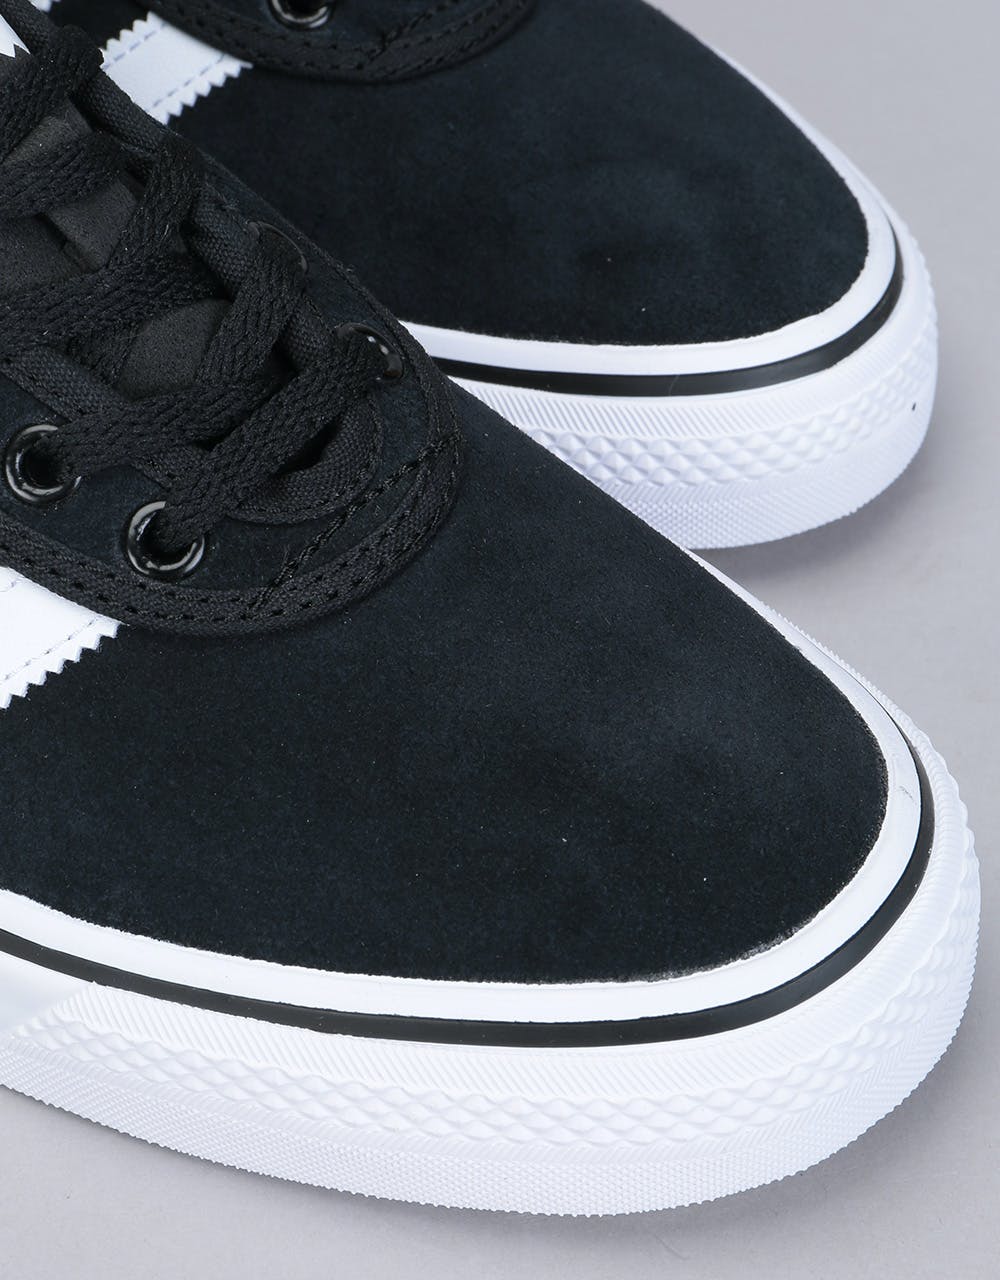 Adidas Adi-Ease Skate Shoes - Core Black/White/Core Black